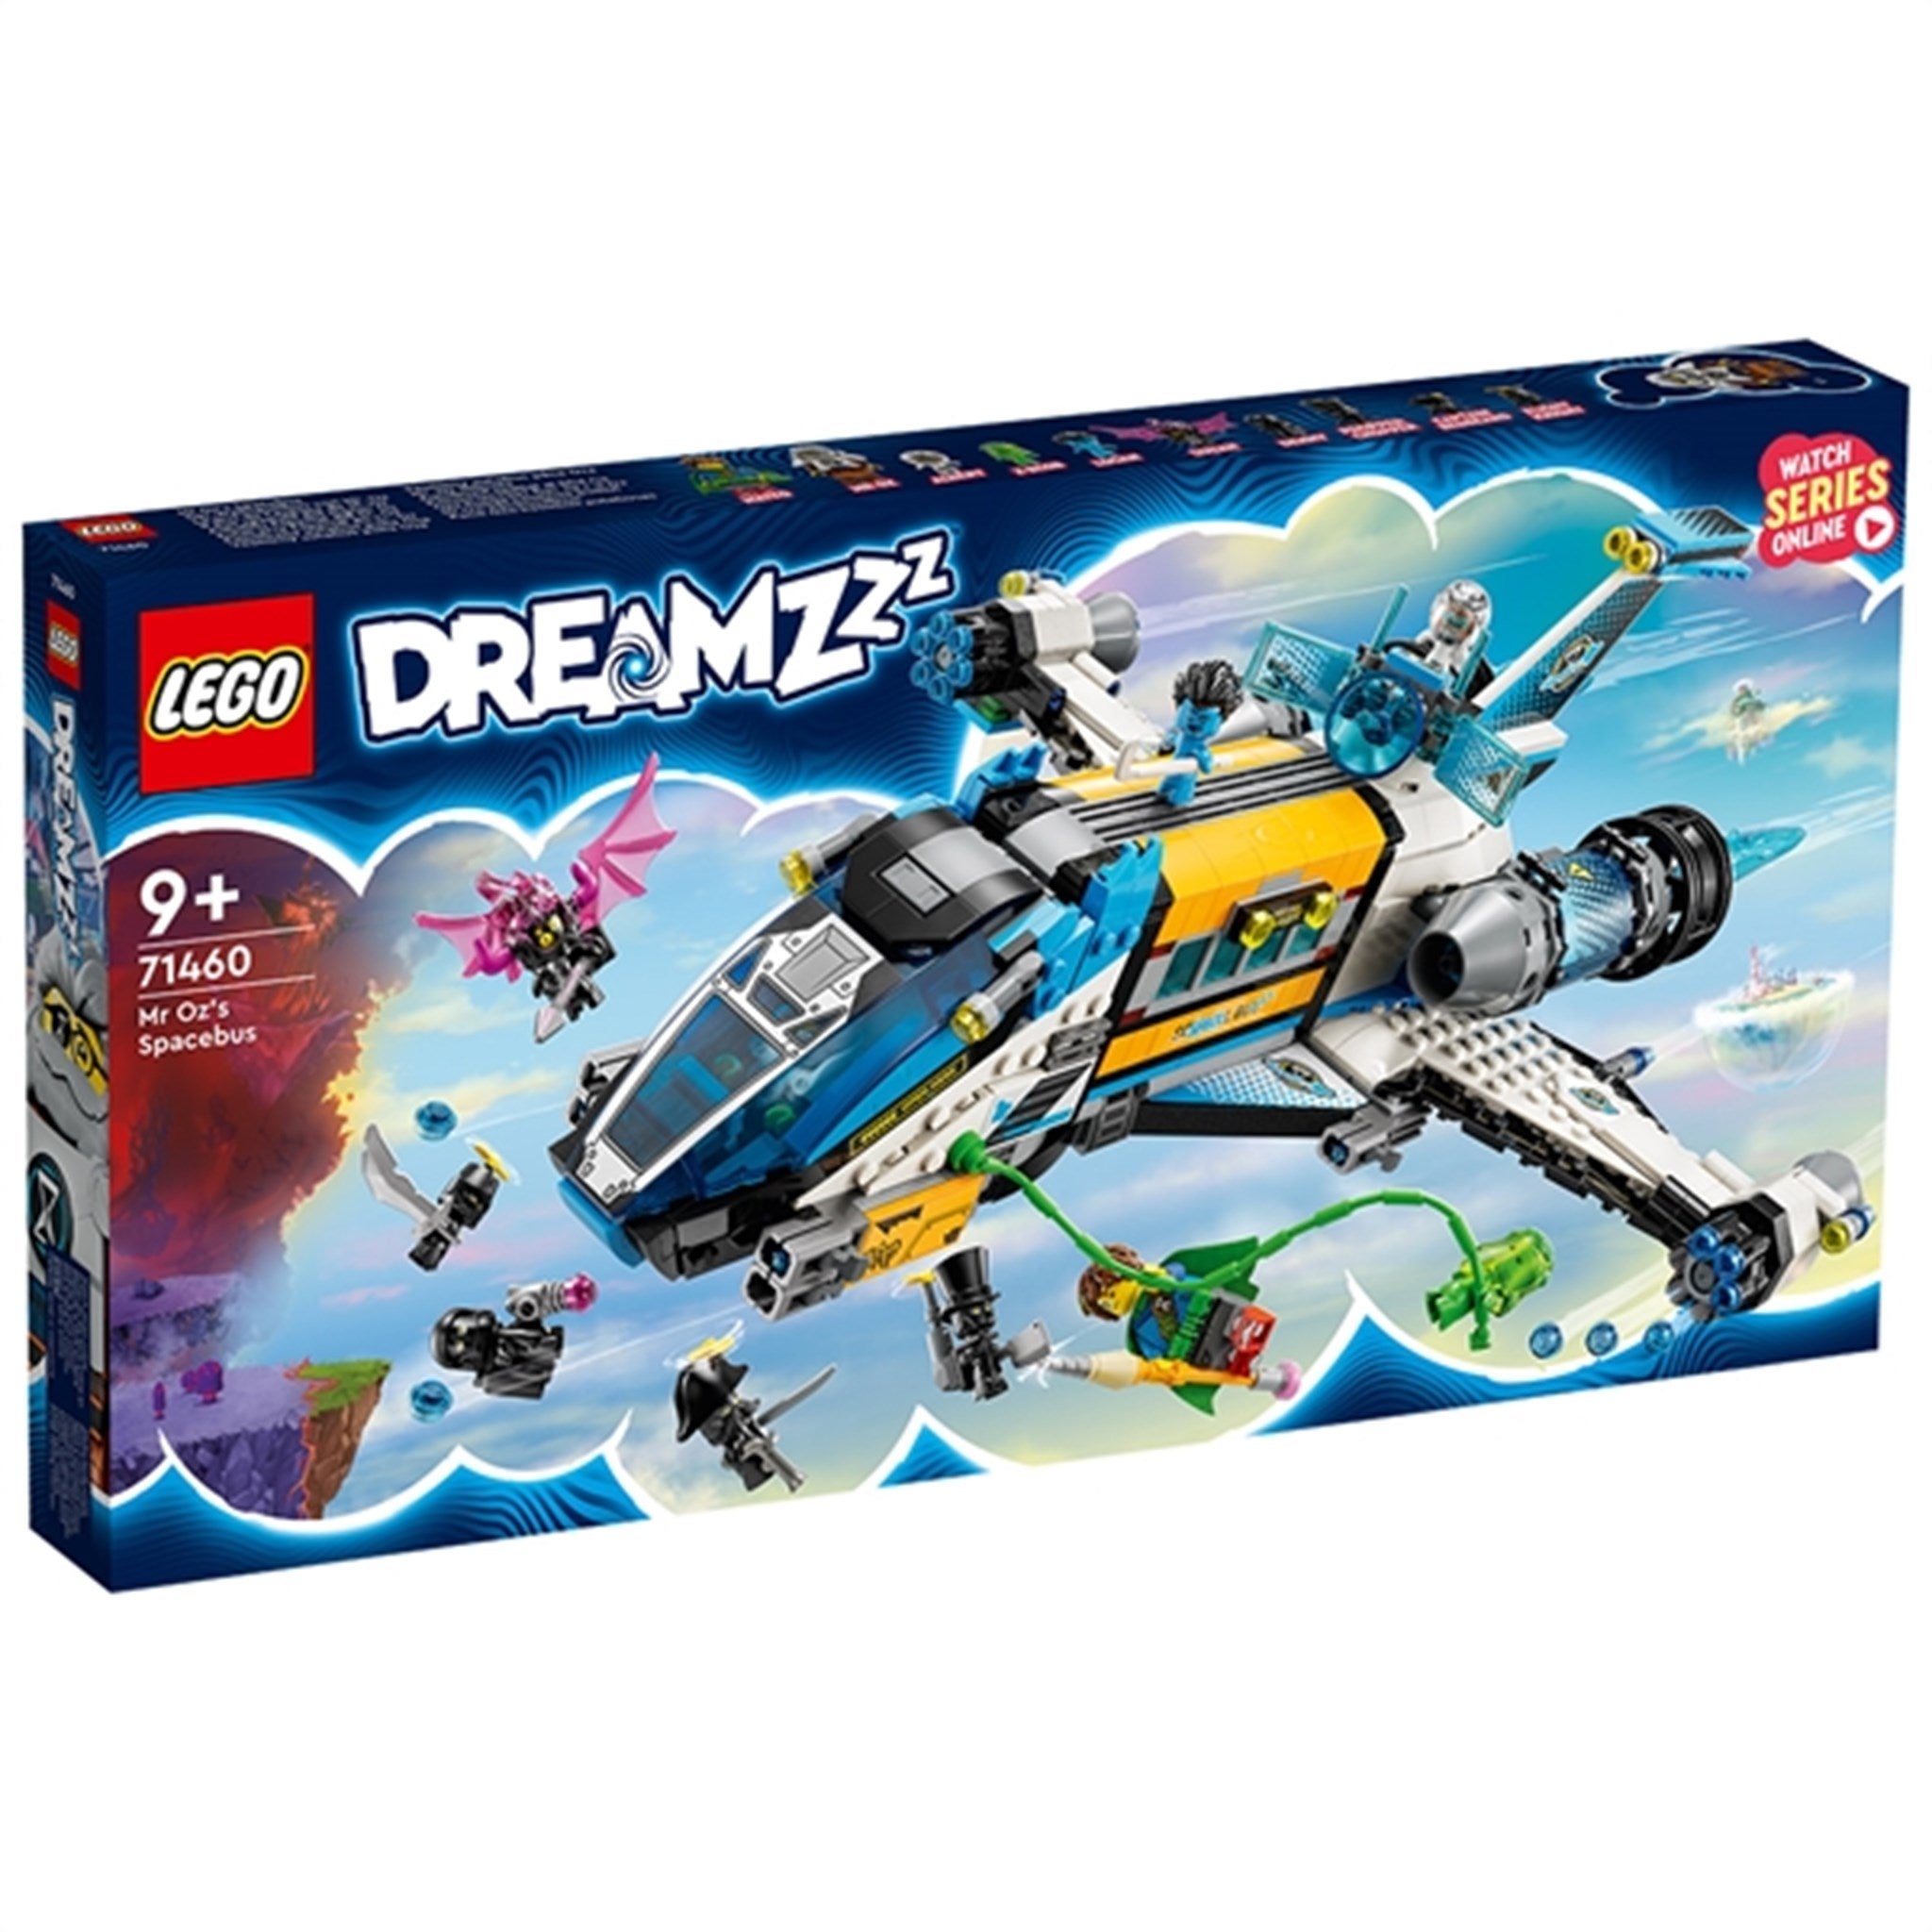 LEGO® DREAMZzz™ Herr Oz' Rombuss